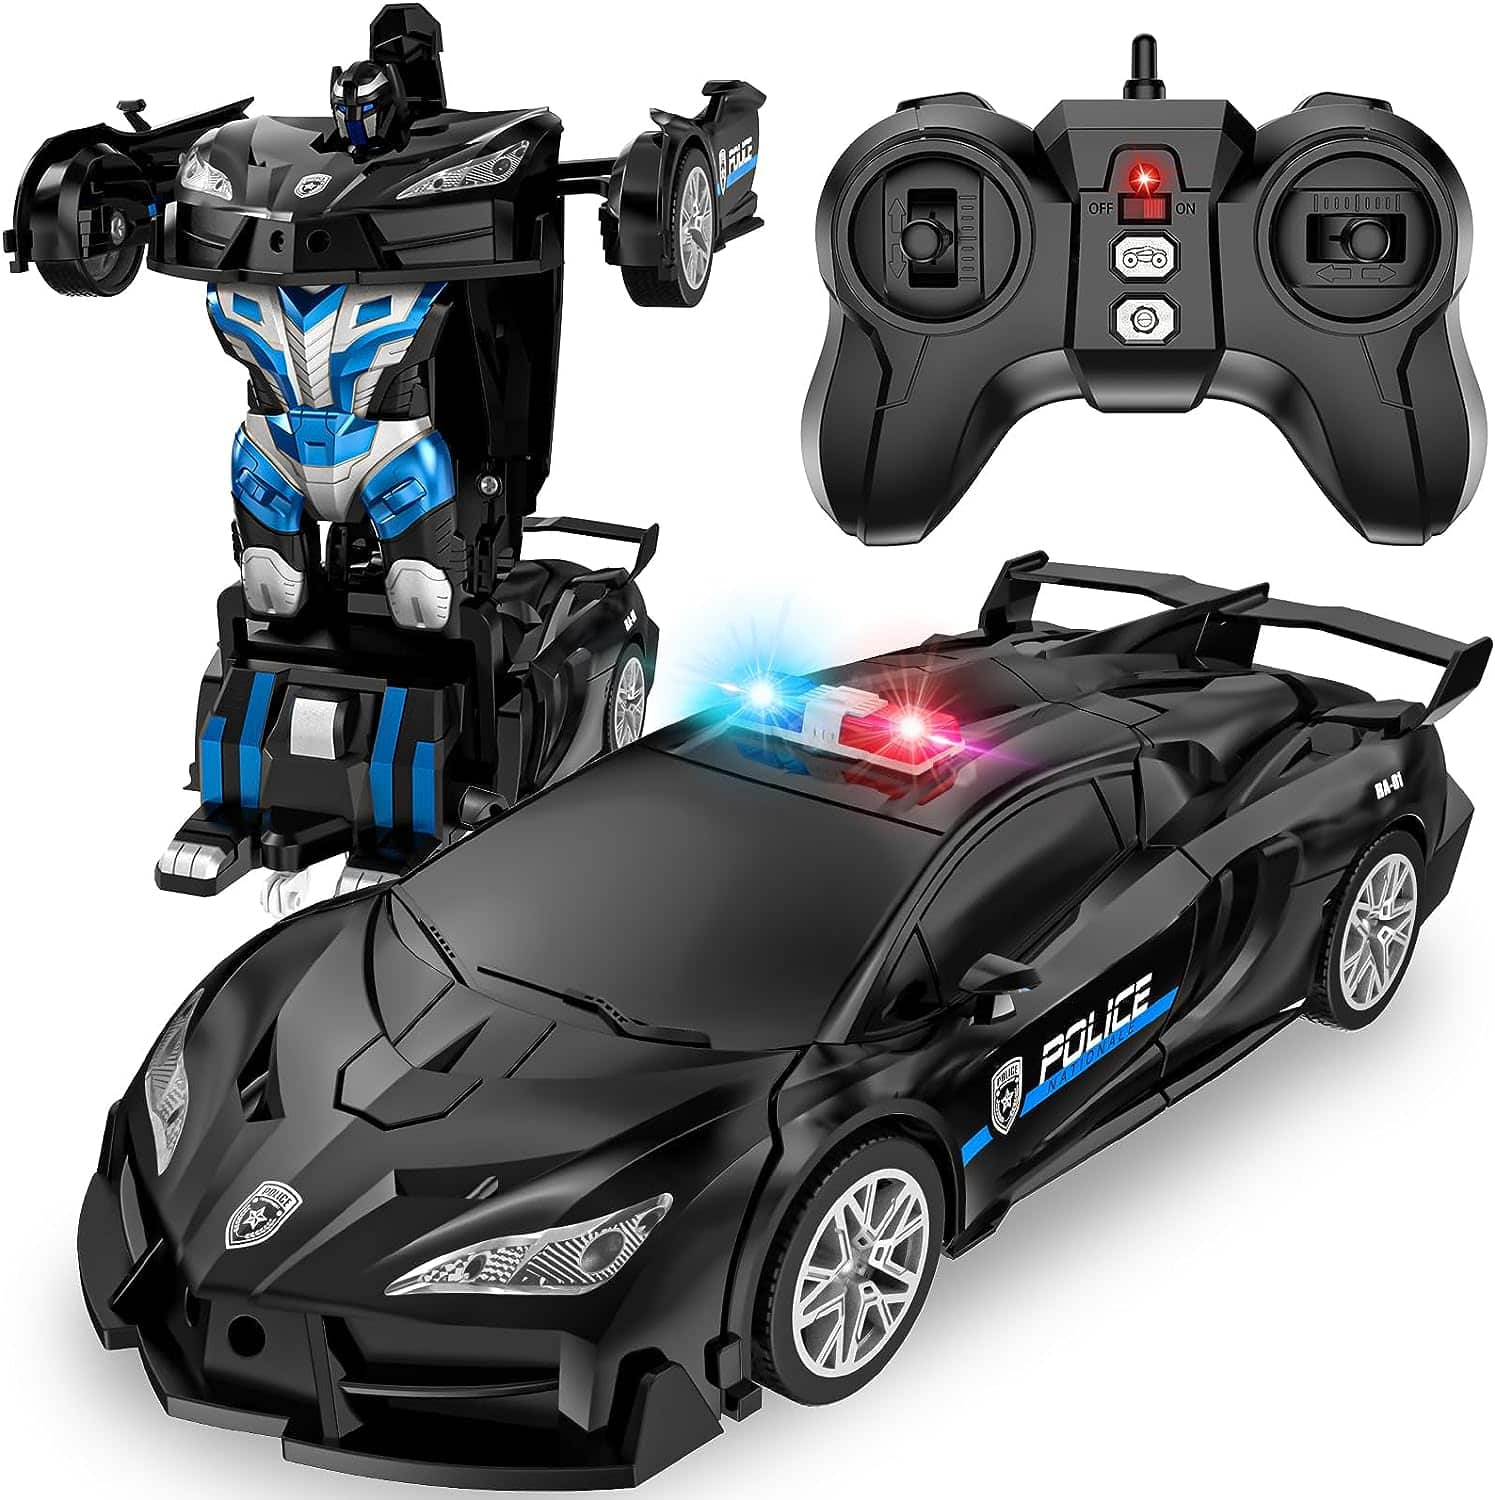 LNNKINE Remote Control Car: A Transforming Police Car Toy for Endless Fun